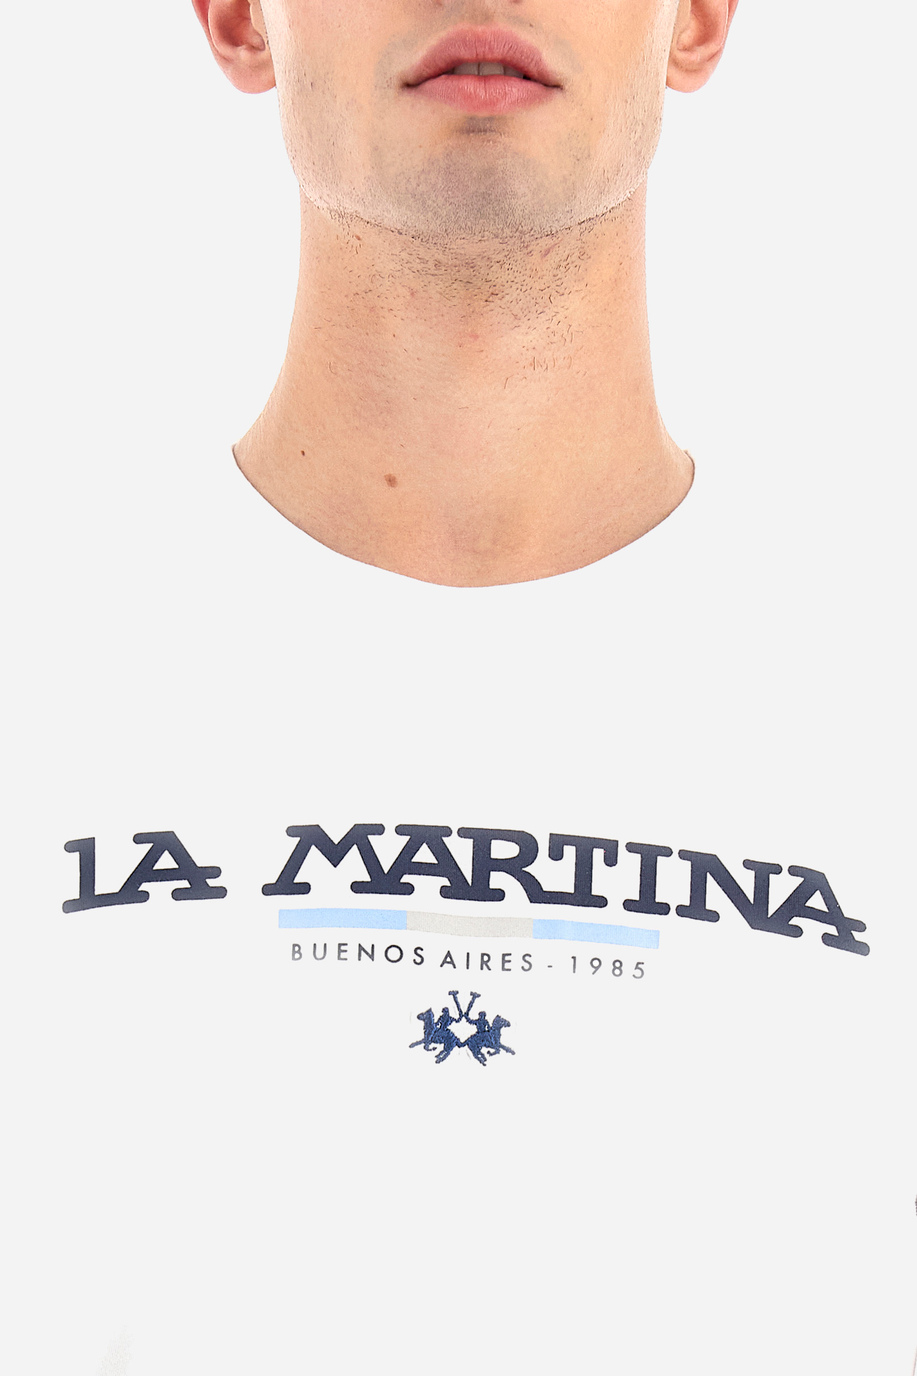 Tee-shirt homme coupe classique - Winford - T-shirts | La Martina - Official Online Shop